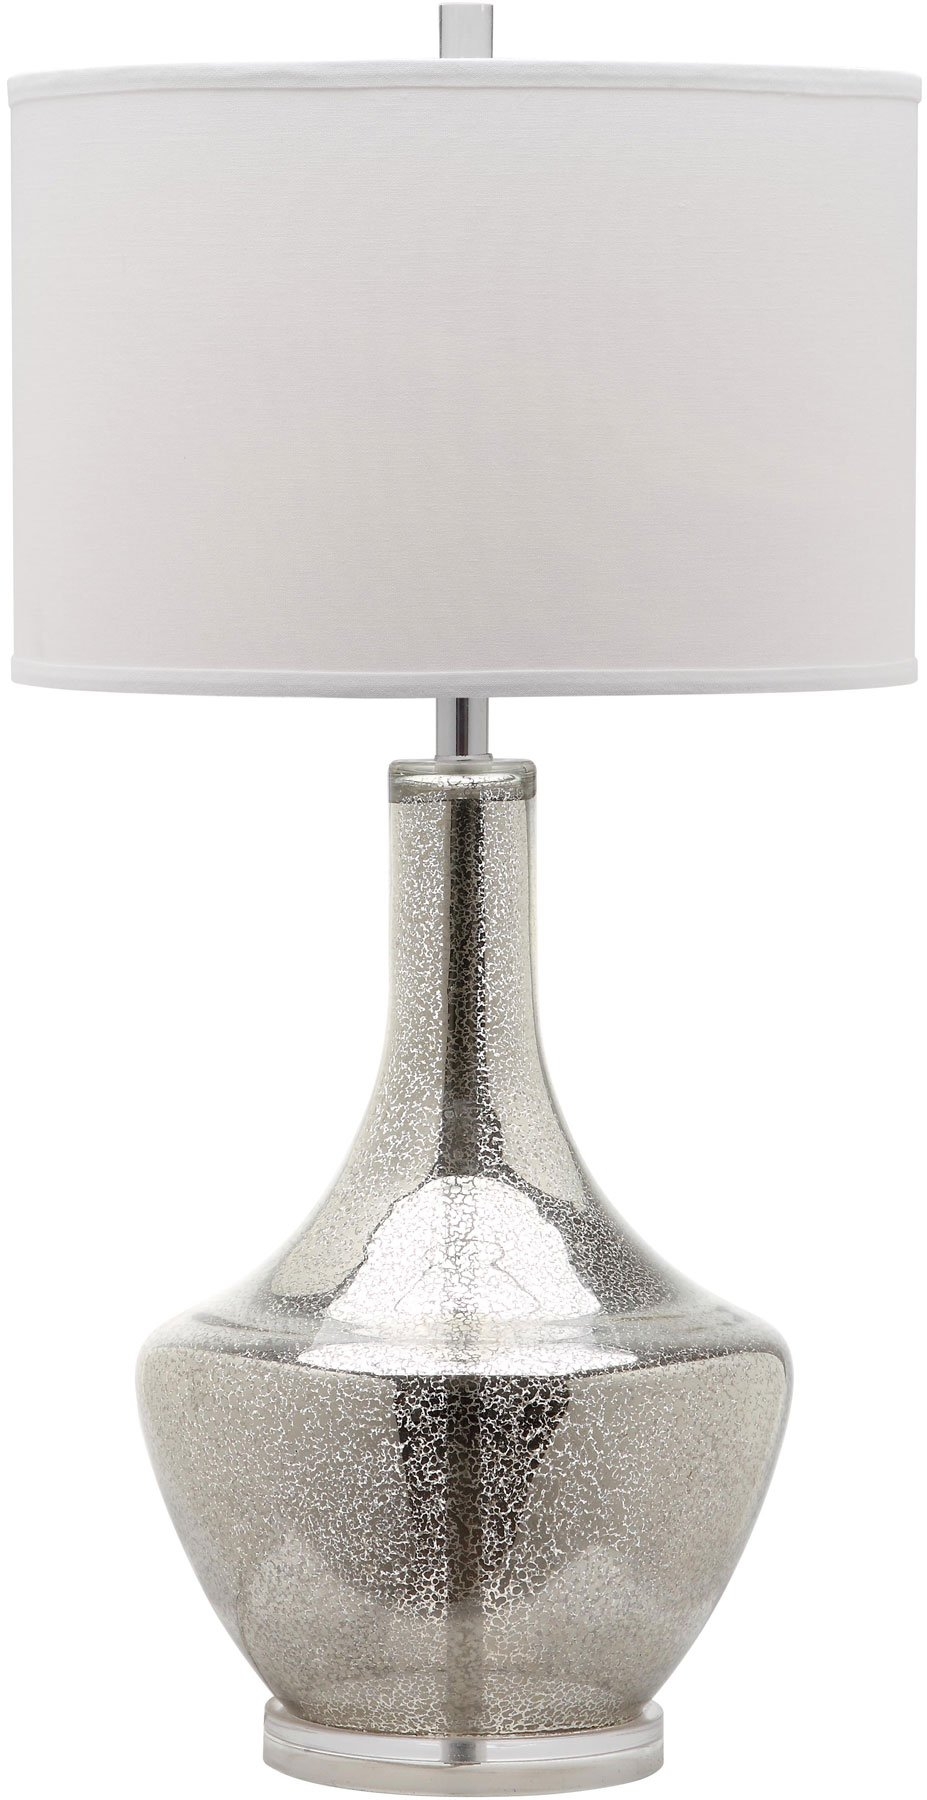 MERCURY TABLE LAMP - Image 0